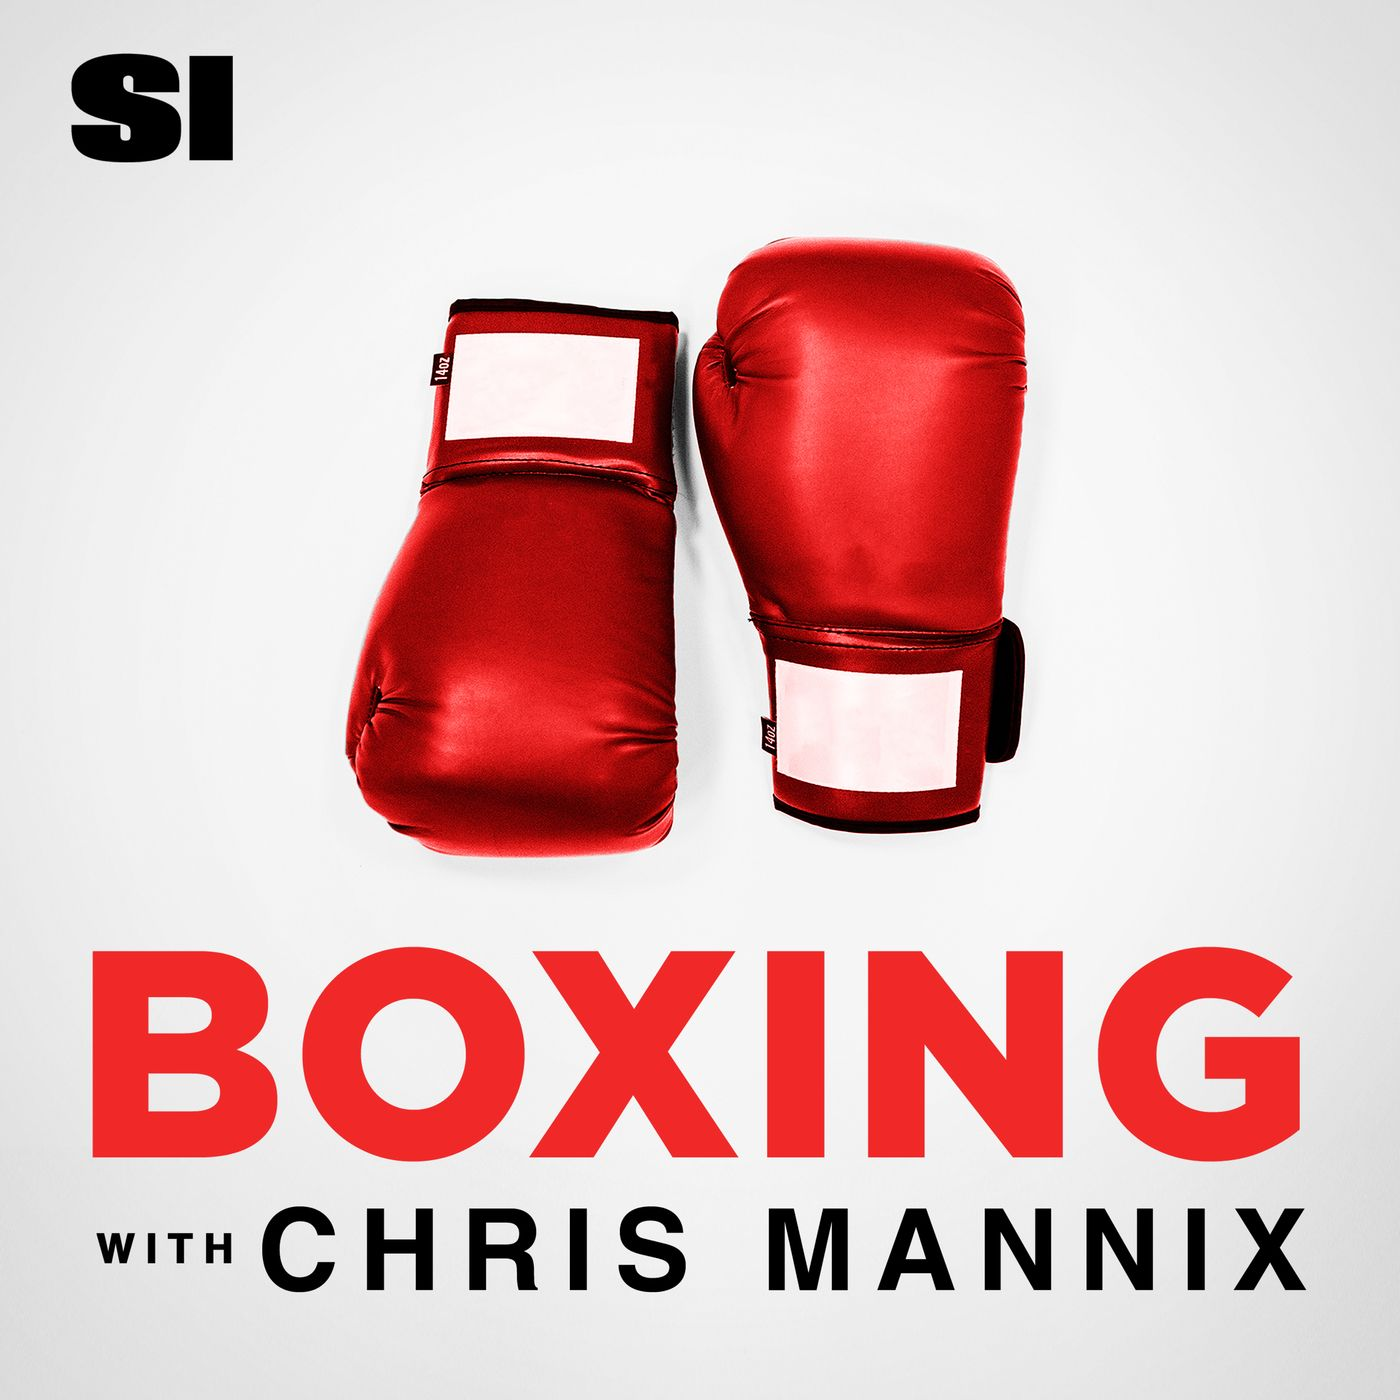 A highlight from Boxing with Chris Mannix - Does Netflix Got Next?